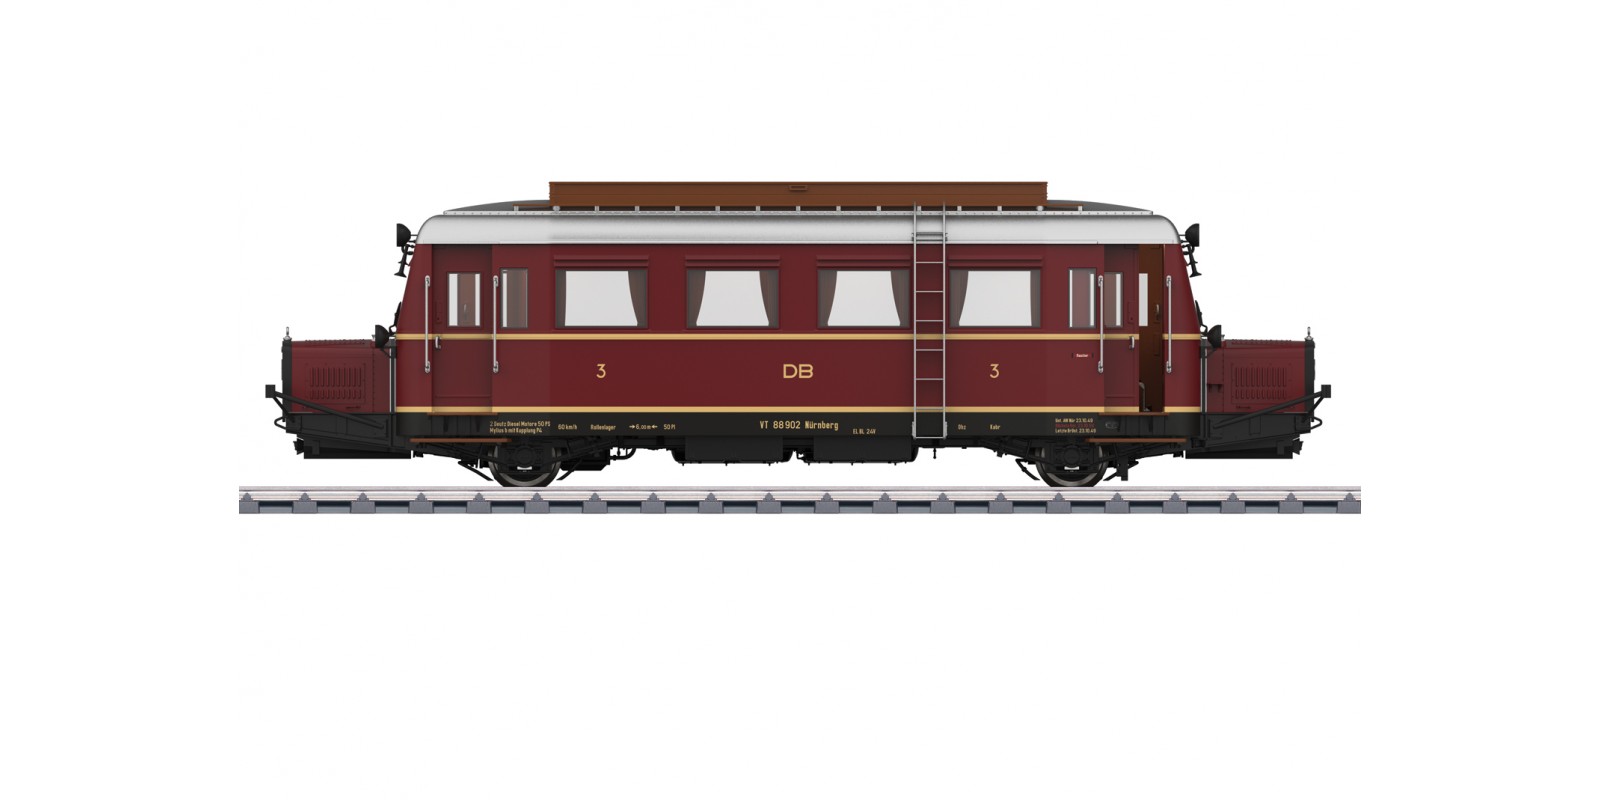 55133 Class VT 88.9 Diesel Powered Rail Car - the Pig's Snot